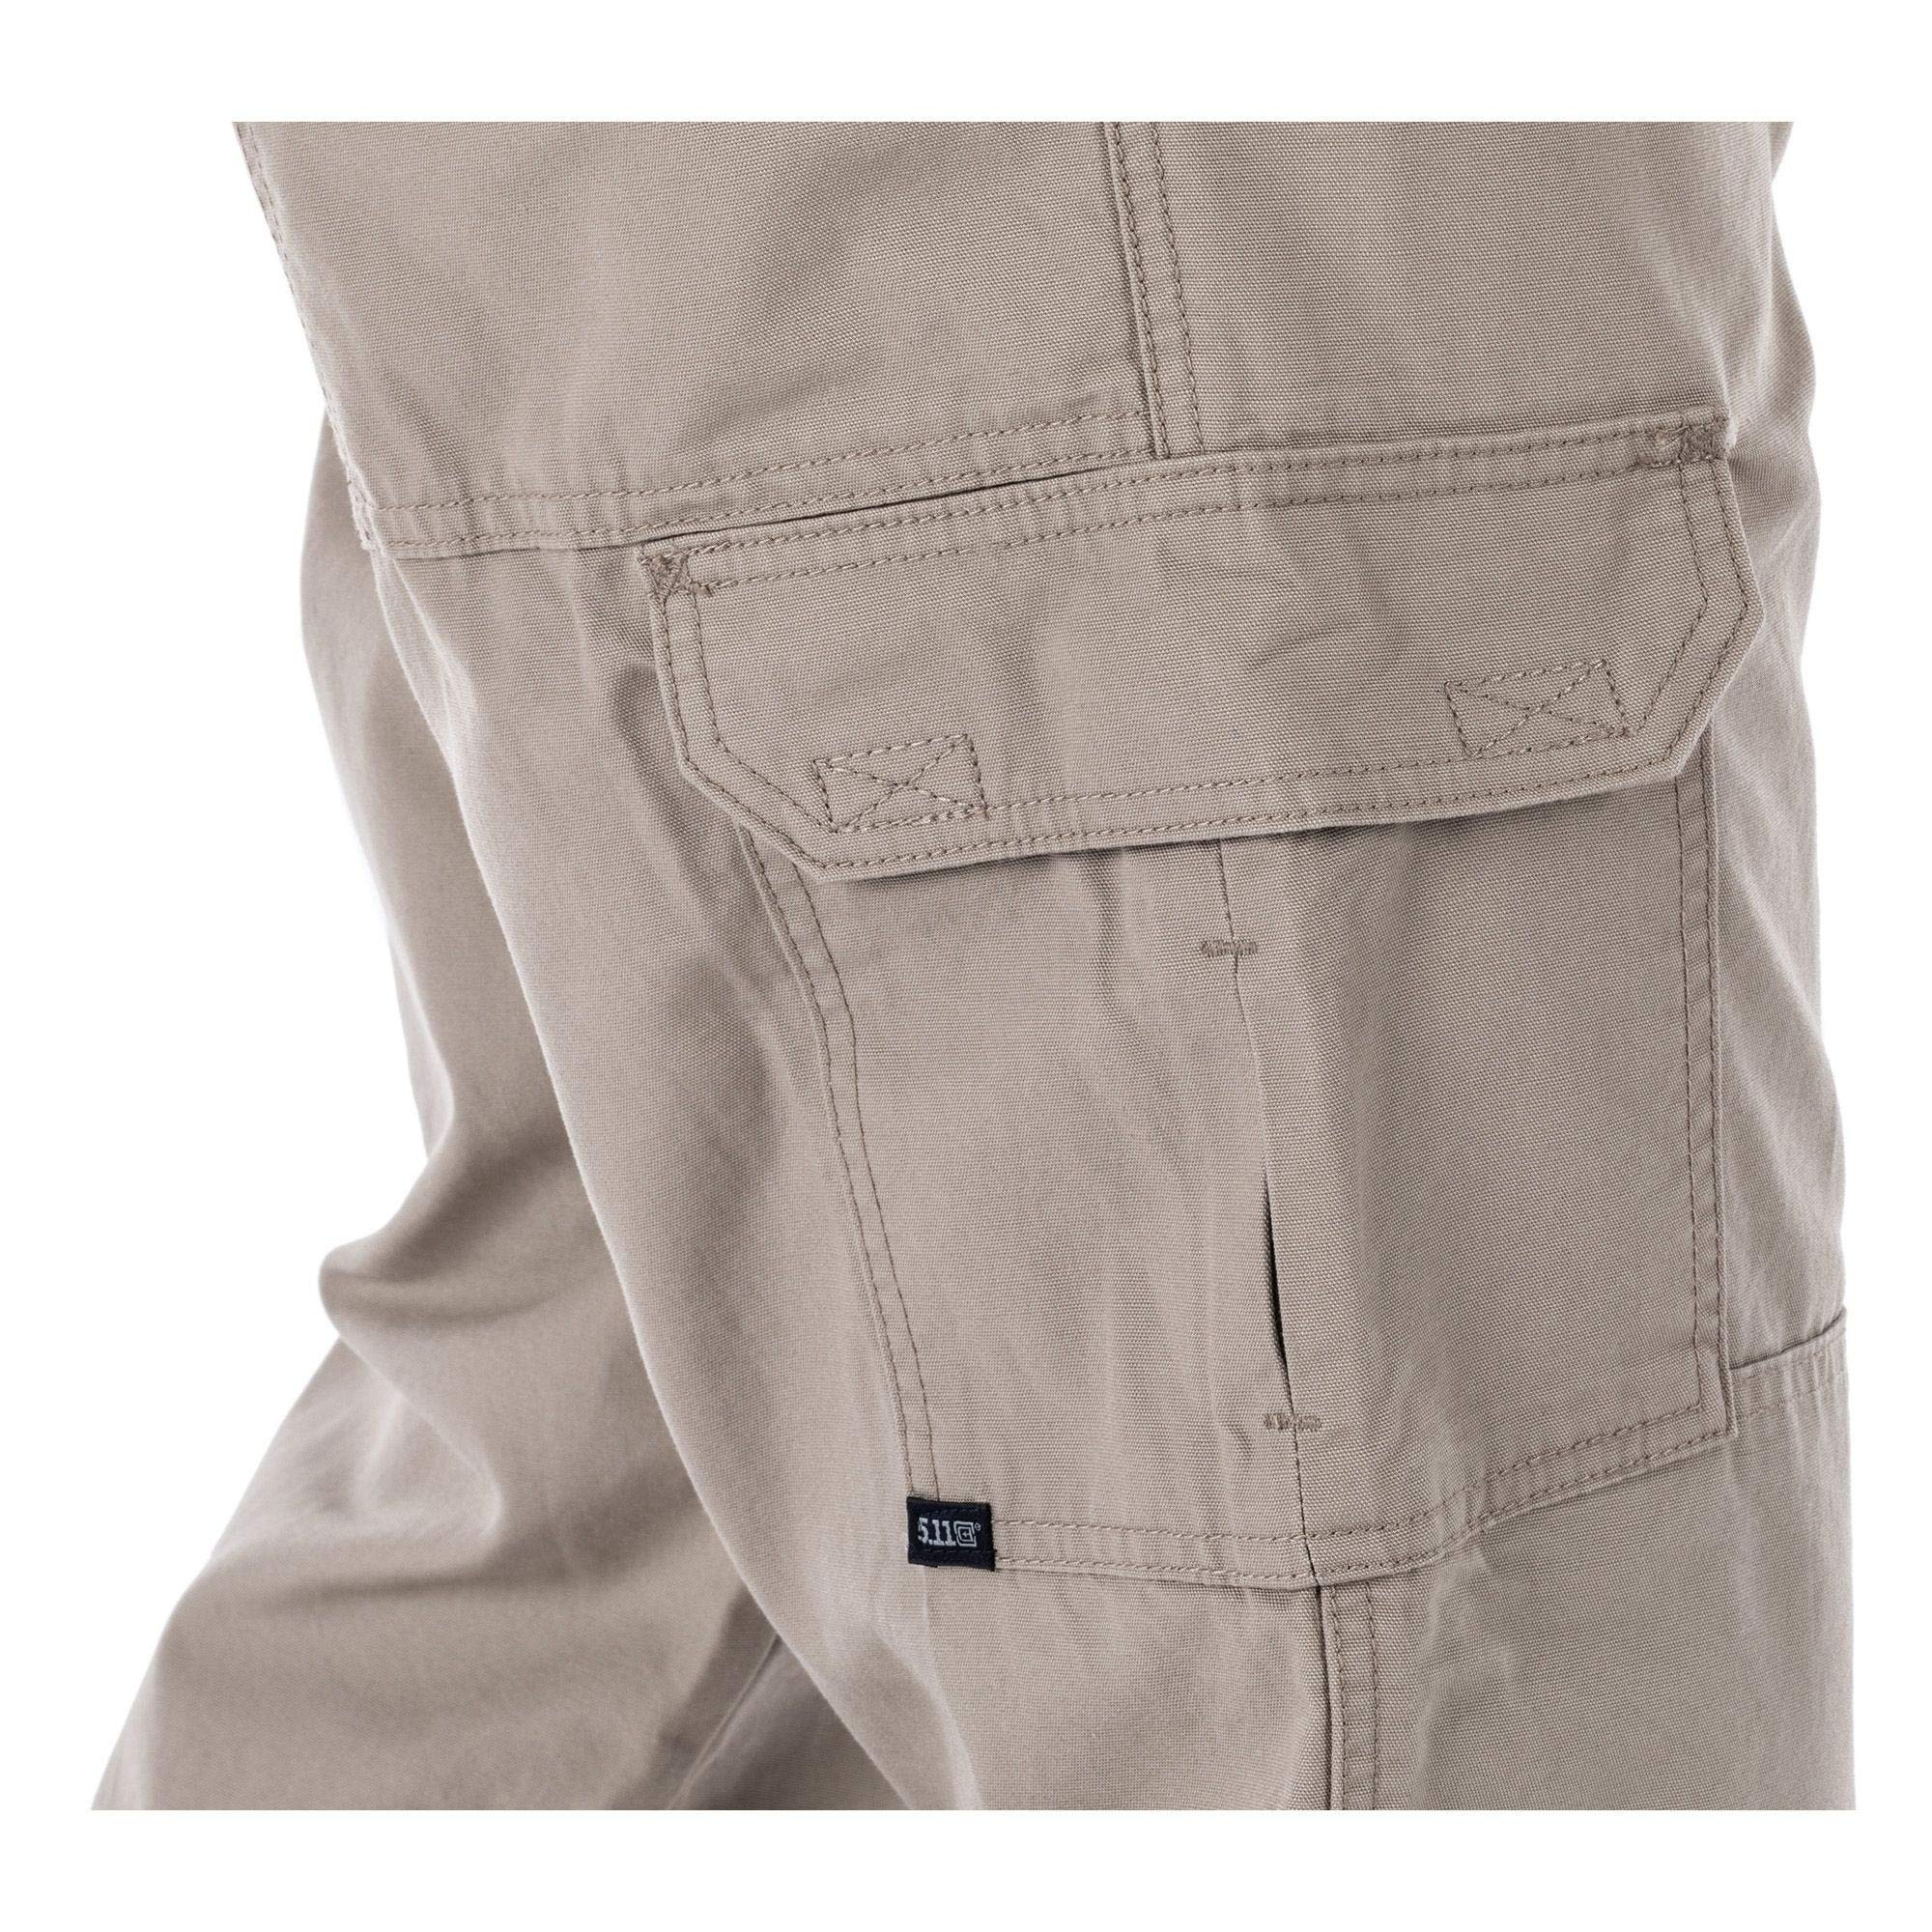 5.11 Tactical Men's Active Work Pants, Superior Fit, Double Reinforced, 100% Cotton, Style 74251